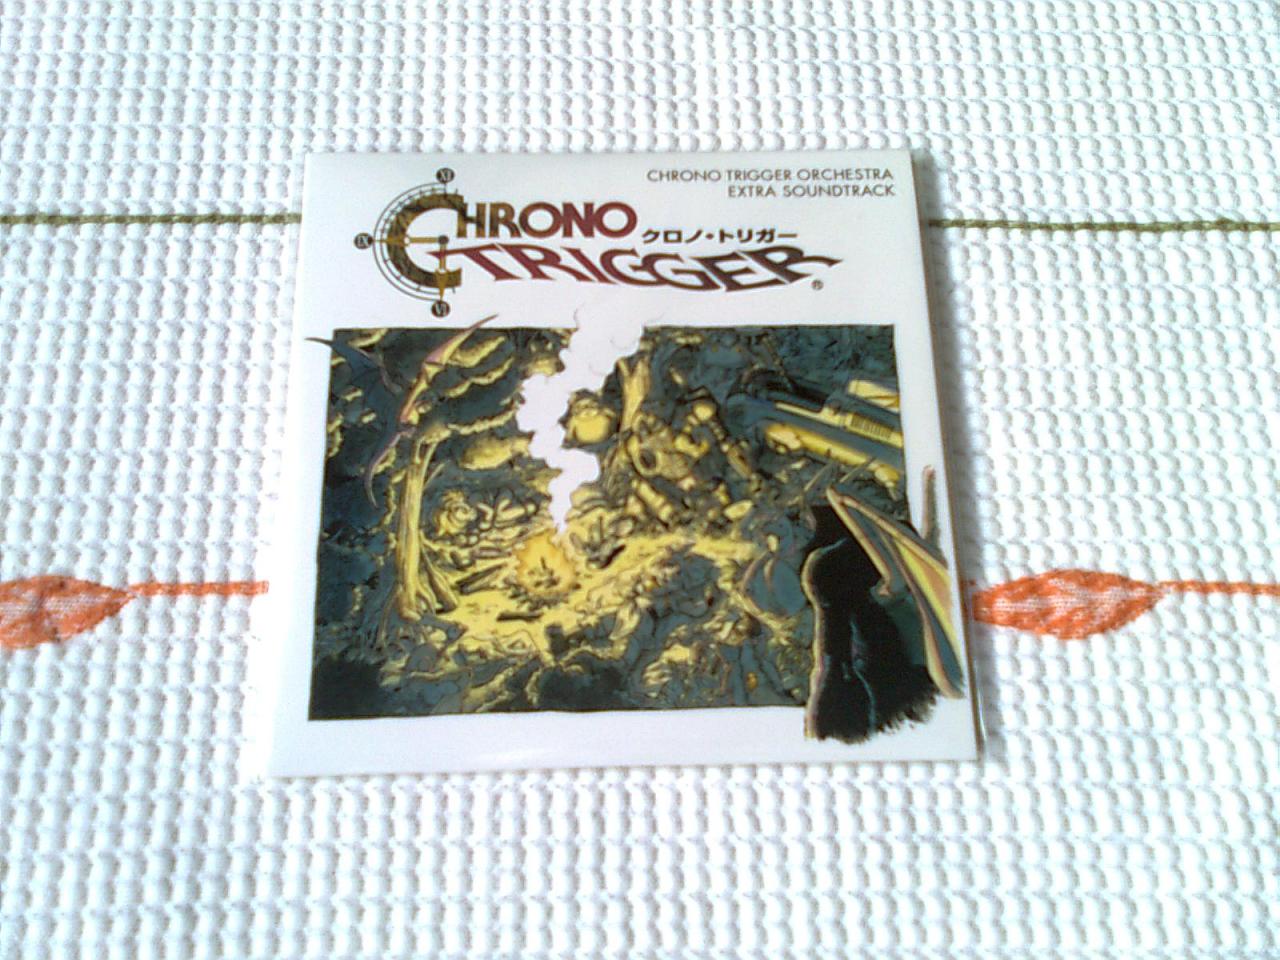 download chrono trigger ost orchestra